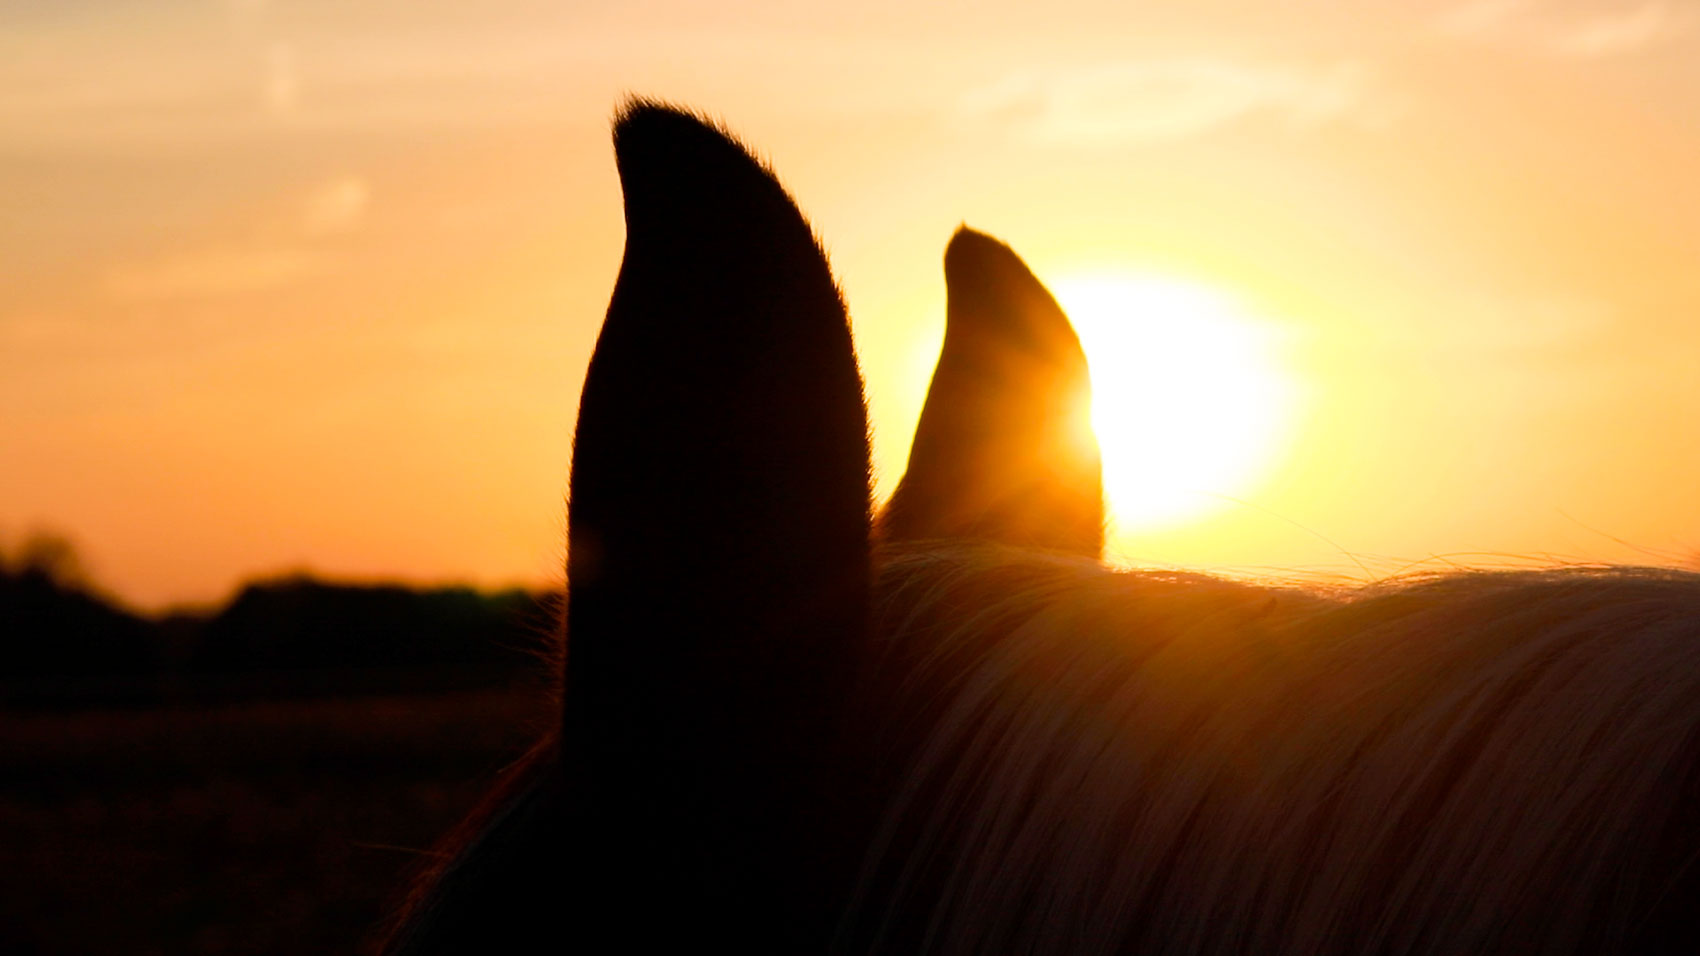 Horse ears in the sunrise